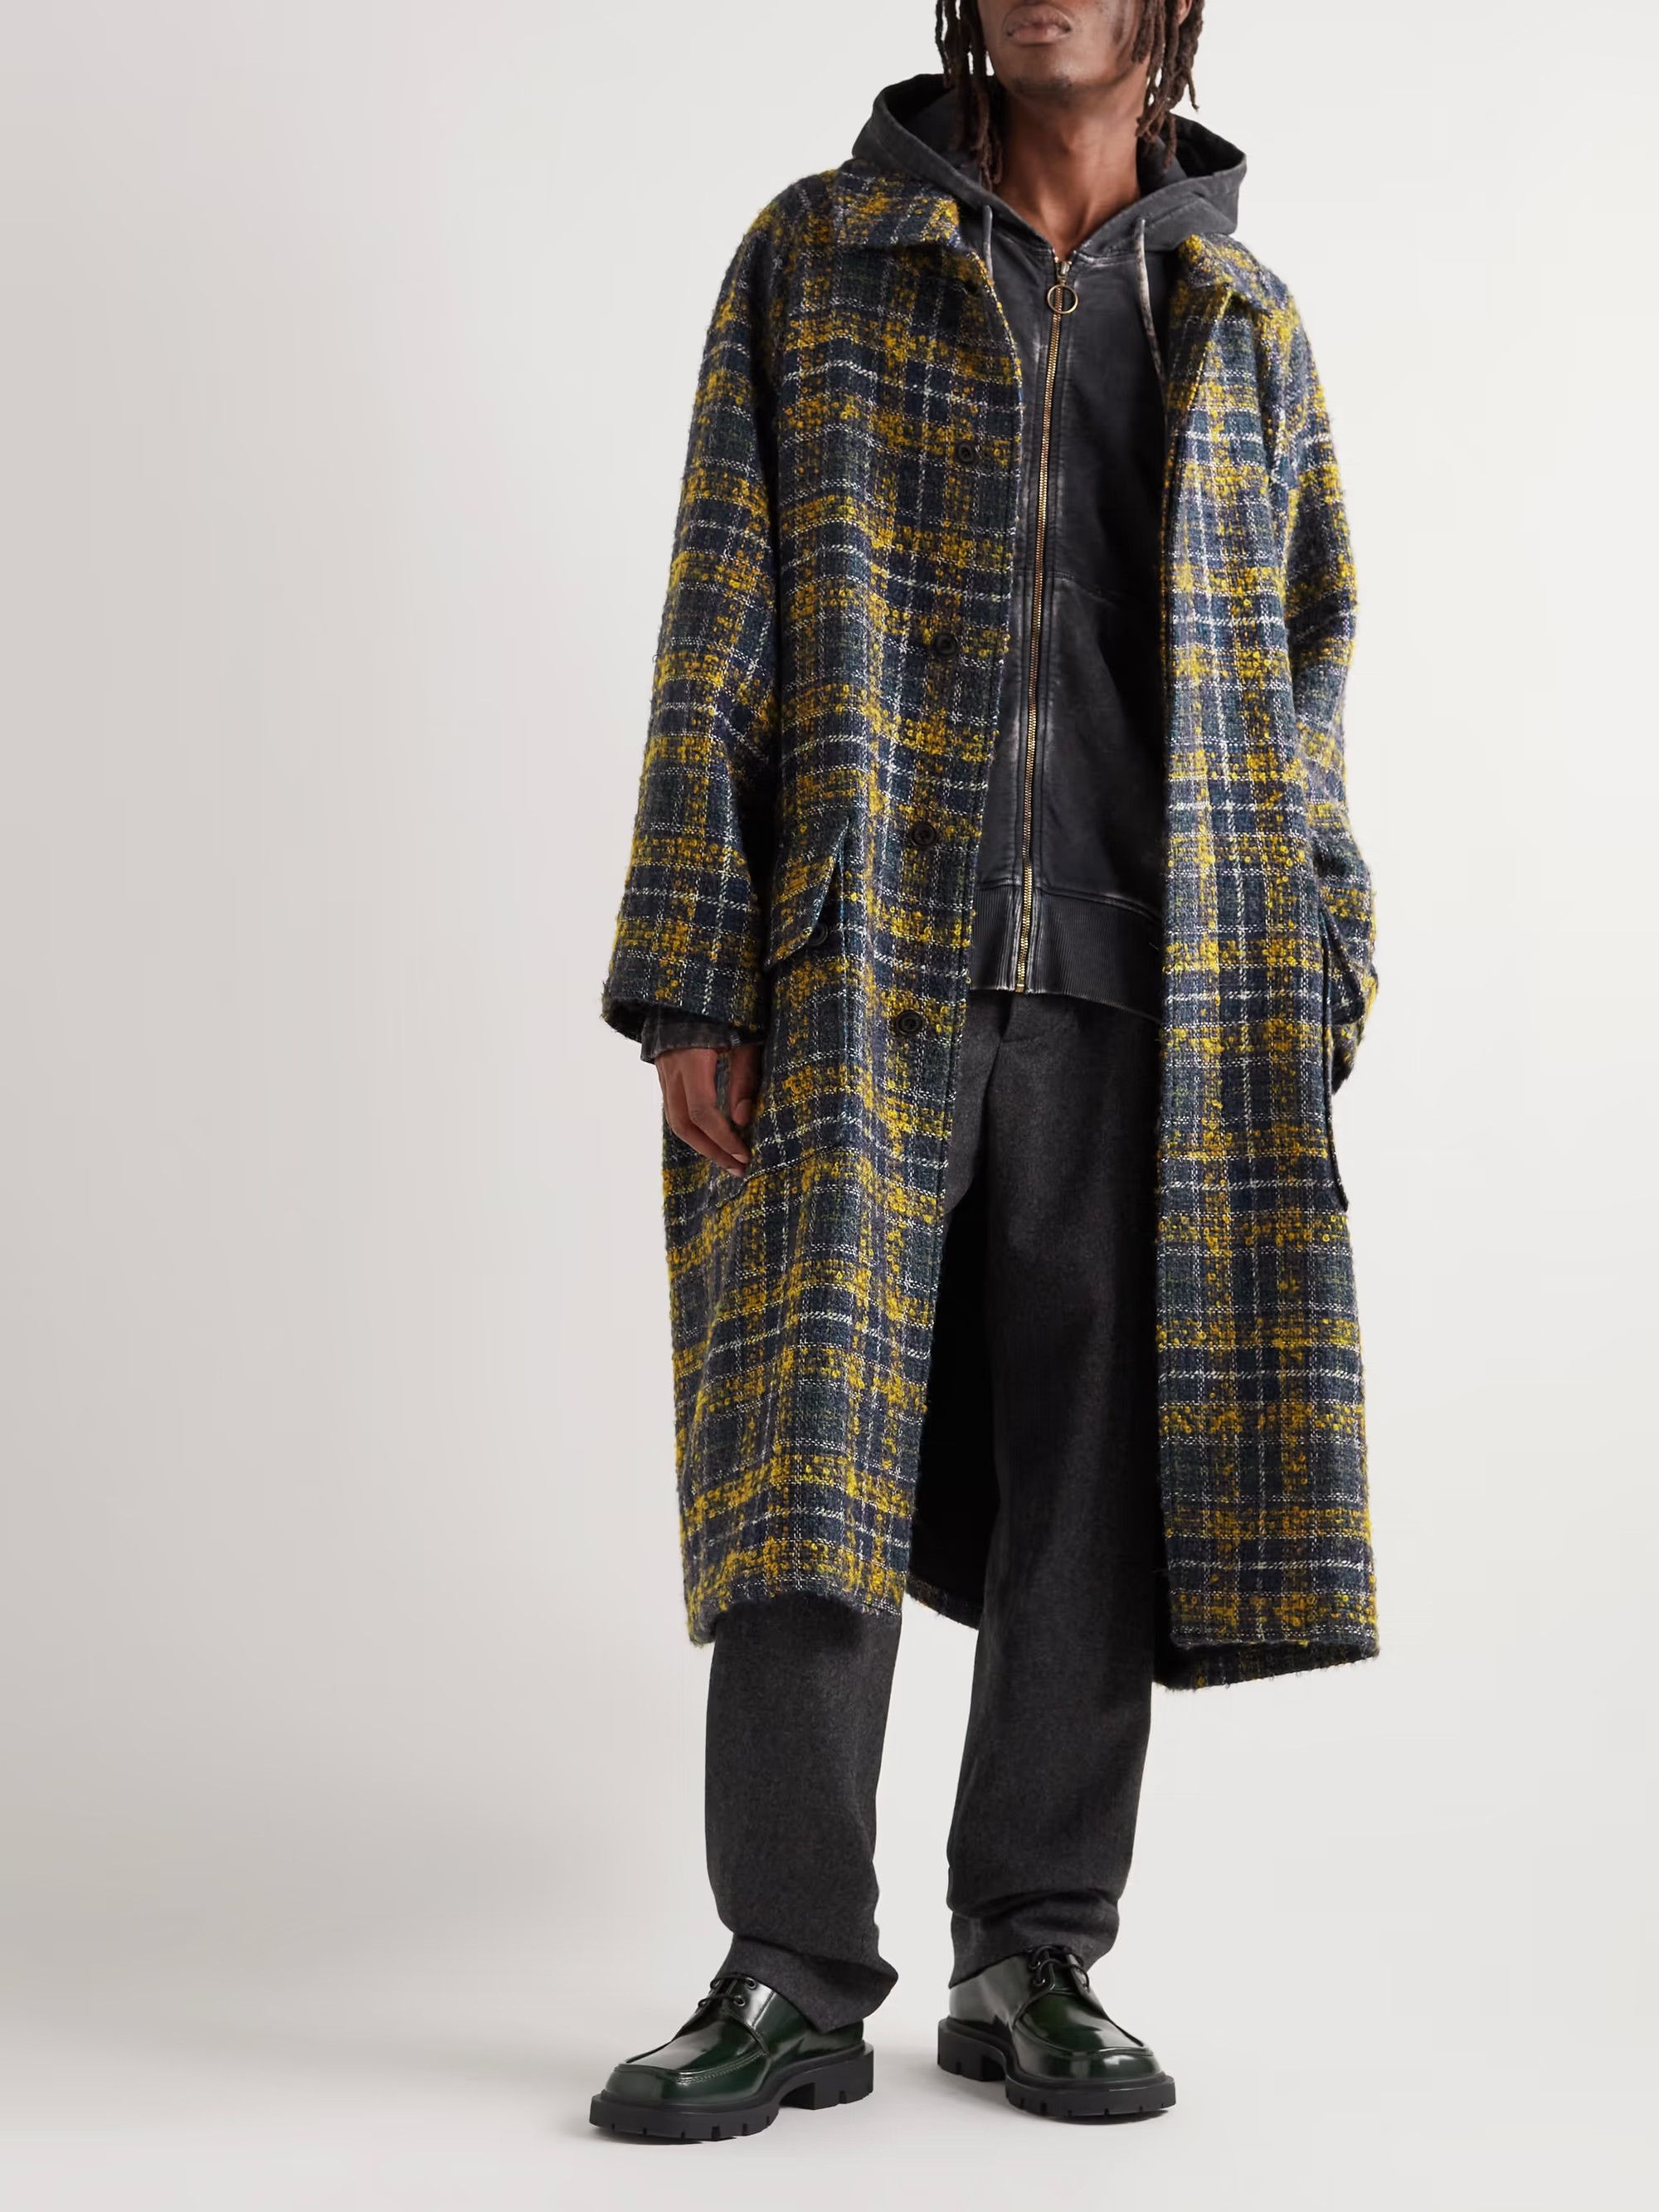 Nicholas Daley Big Mac Lochcarron Tweed Coat | Grailed